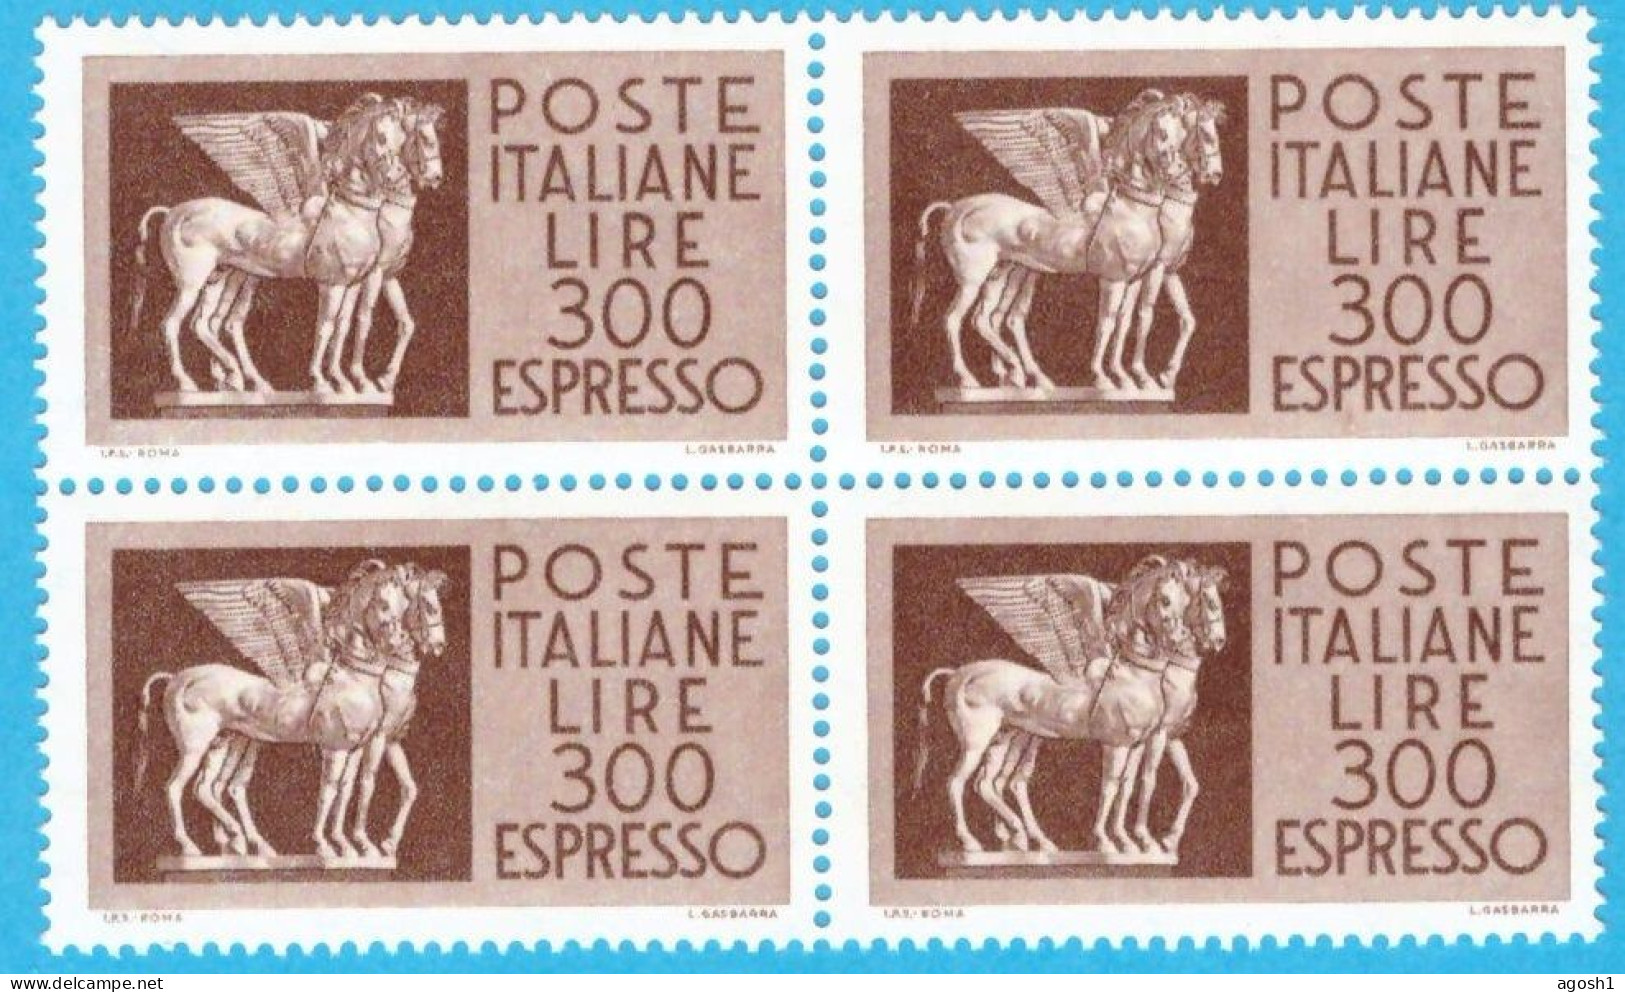 ZBEQ76001 ITALIA 1976 ESPRESSO CAVALLI ALATI LIRE 300 QUARTINA NUOVA MNH ** - Express/pneumatic Mail